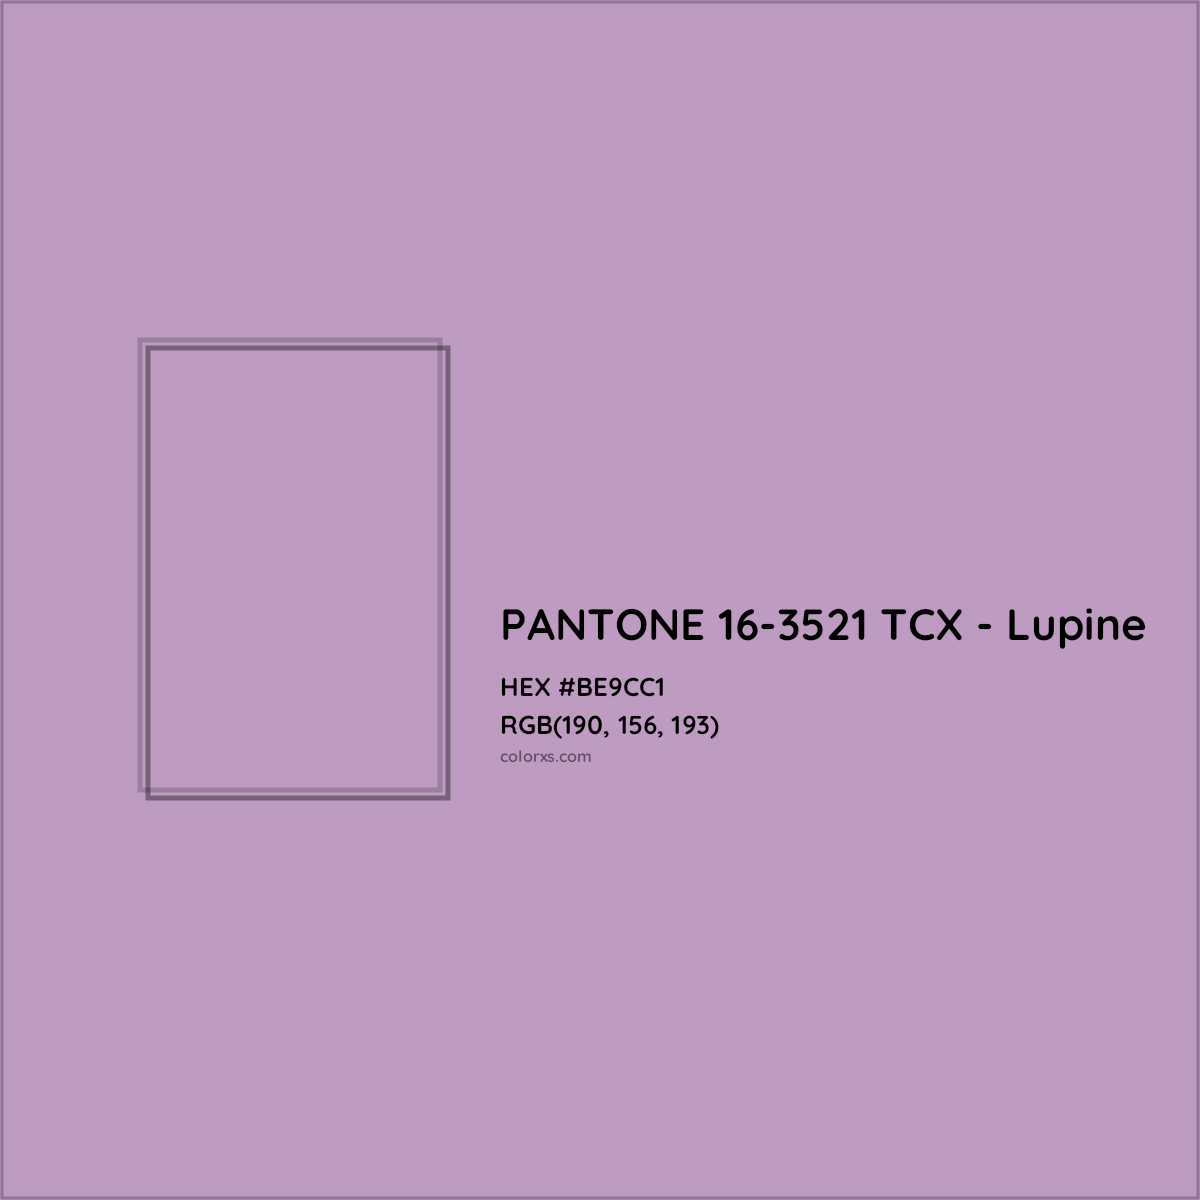 HEX #BE9CC1 PANTONE 16-3521 TCX - Lupine CMS Pantone TCX - Color Code